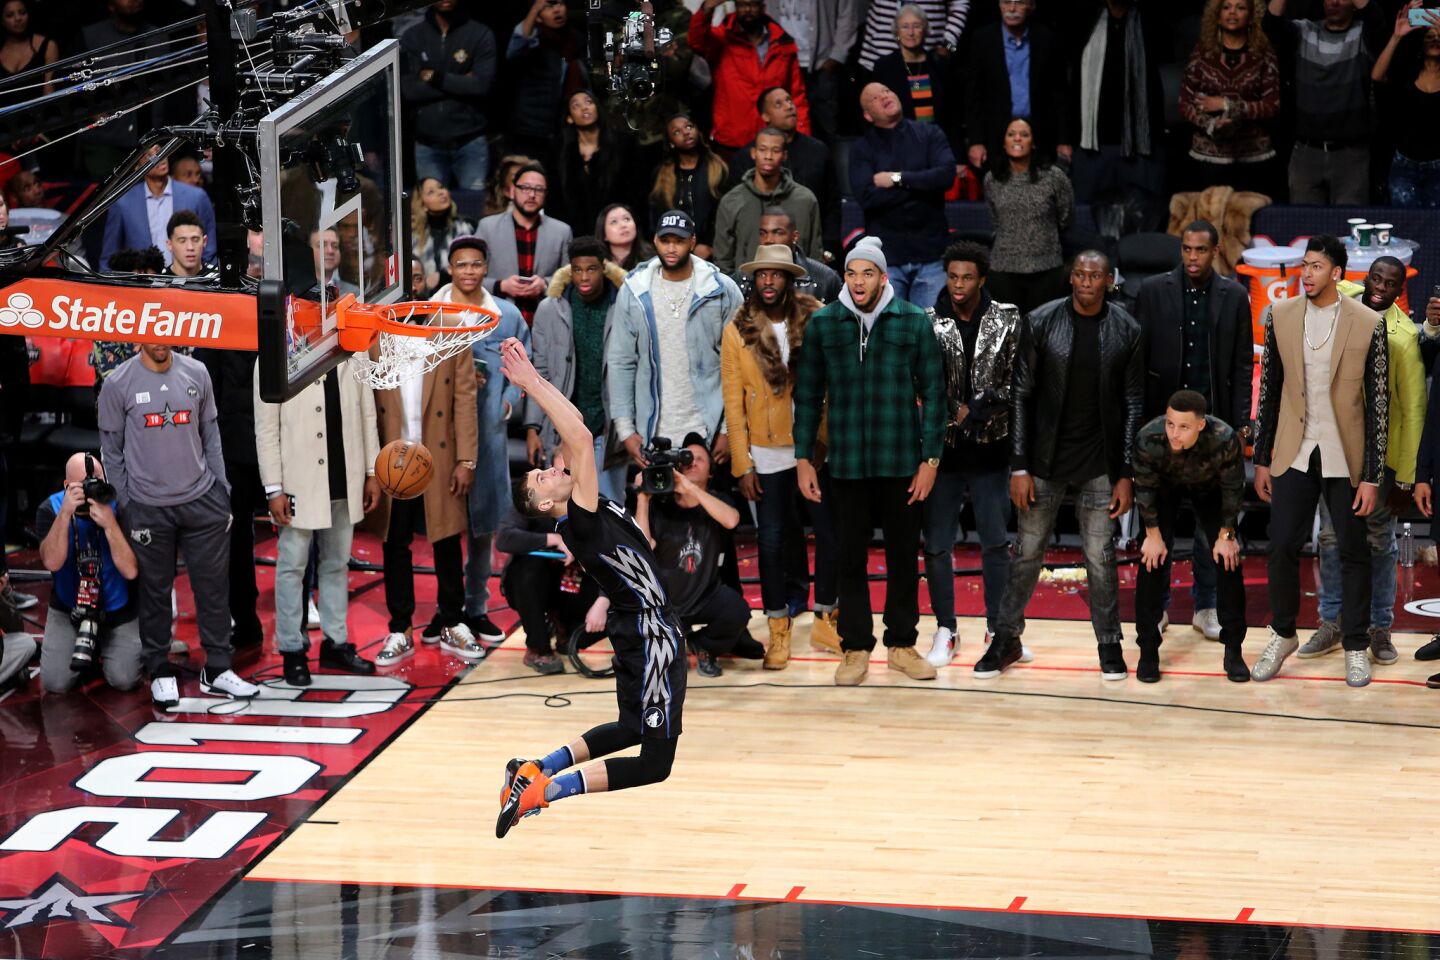 Minnesota guard Zach LaVine puts down a reverse dunk during the contest Saturday night in Toronto.